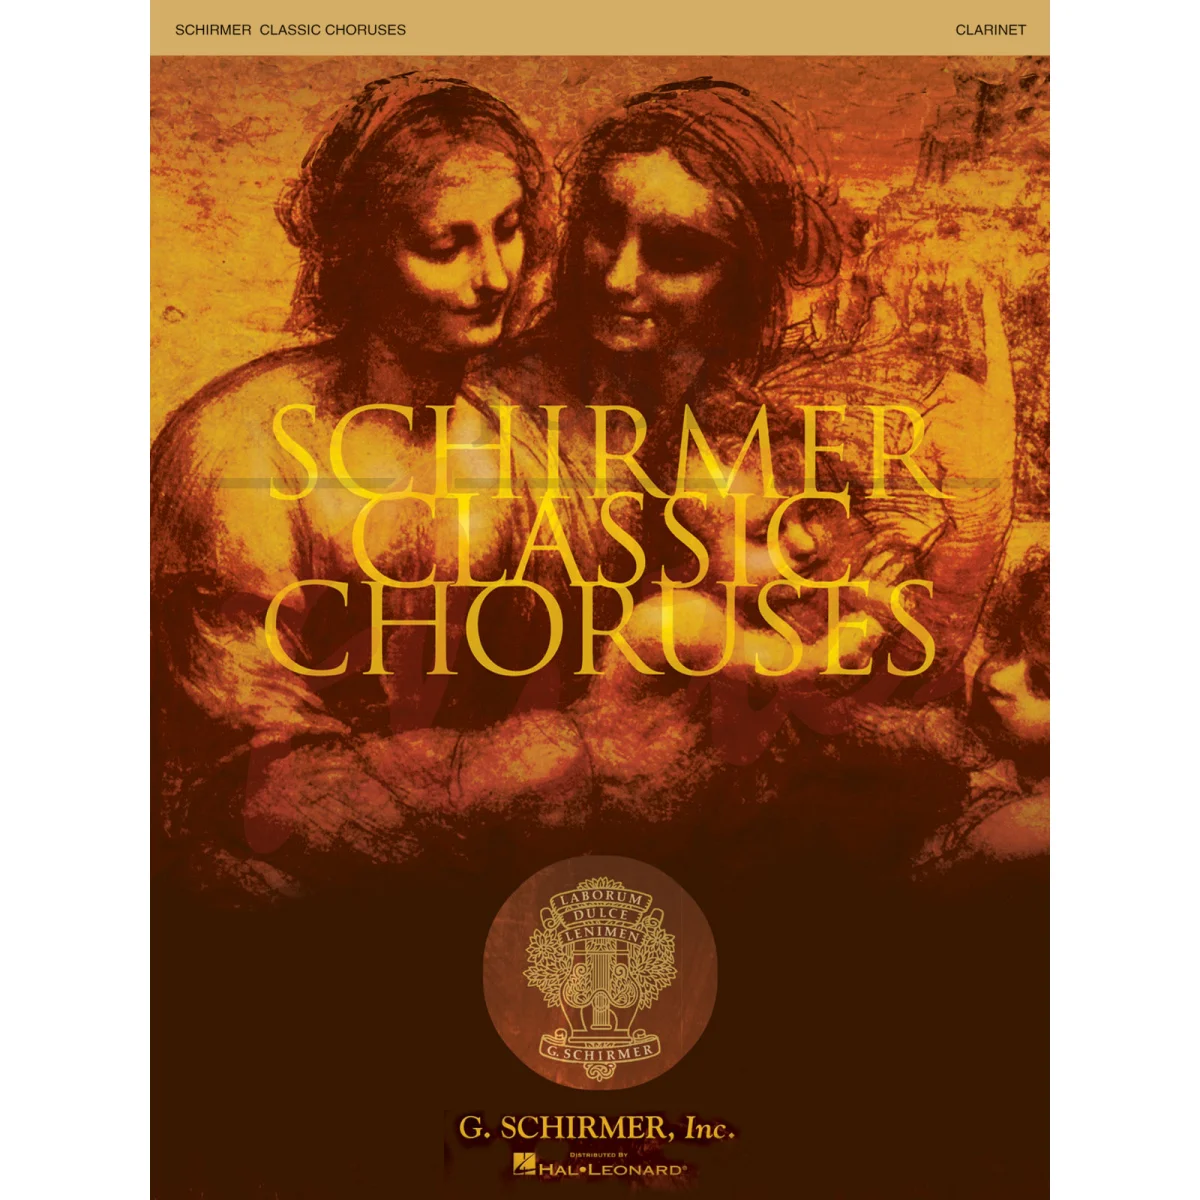 Schirmer Classic Choruses for Clarinet